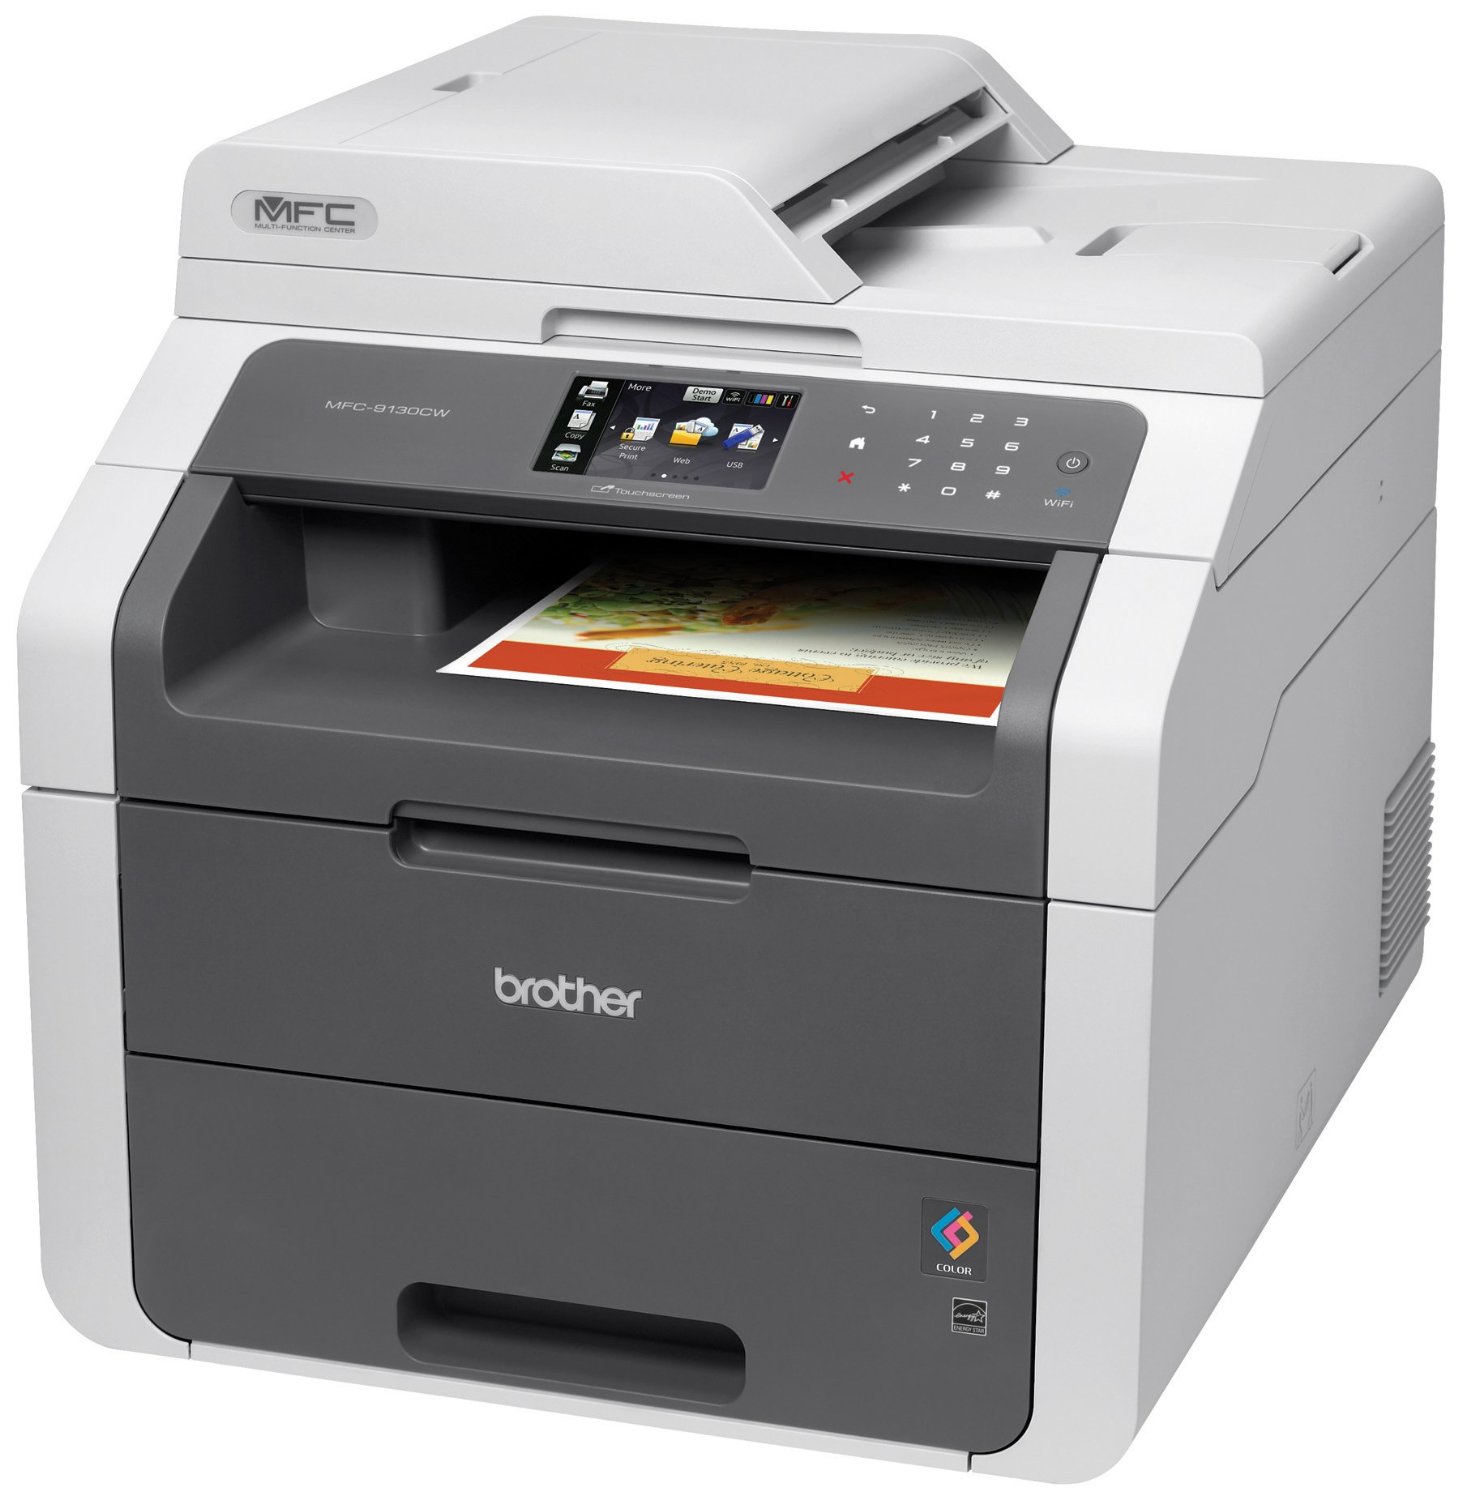 Brother Color Printer Copier Scanner Fax